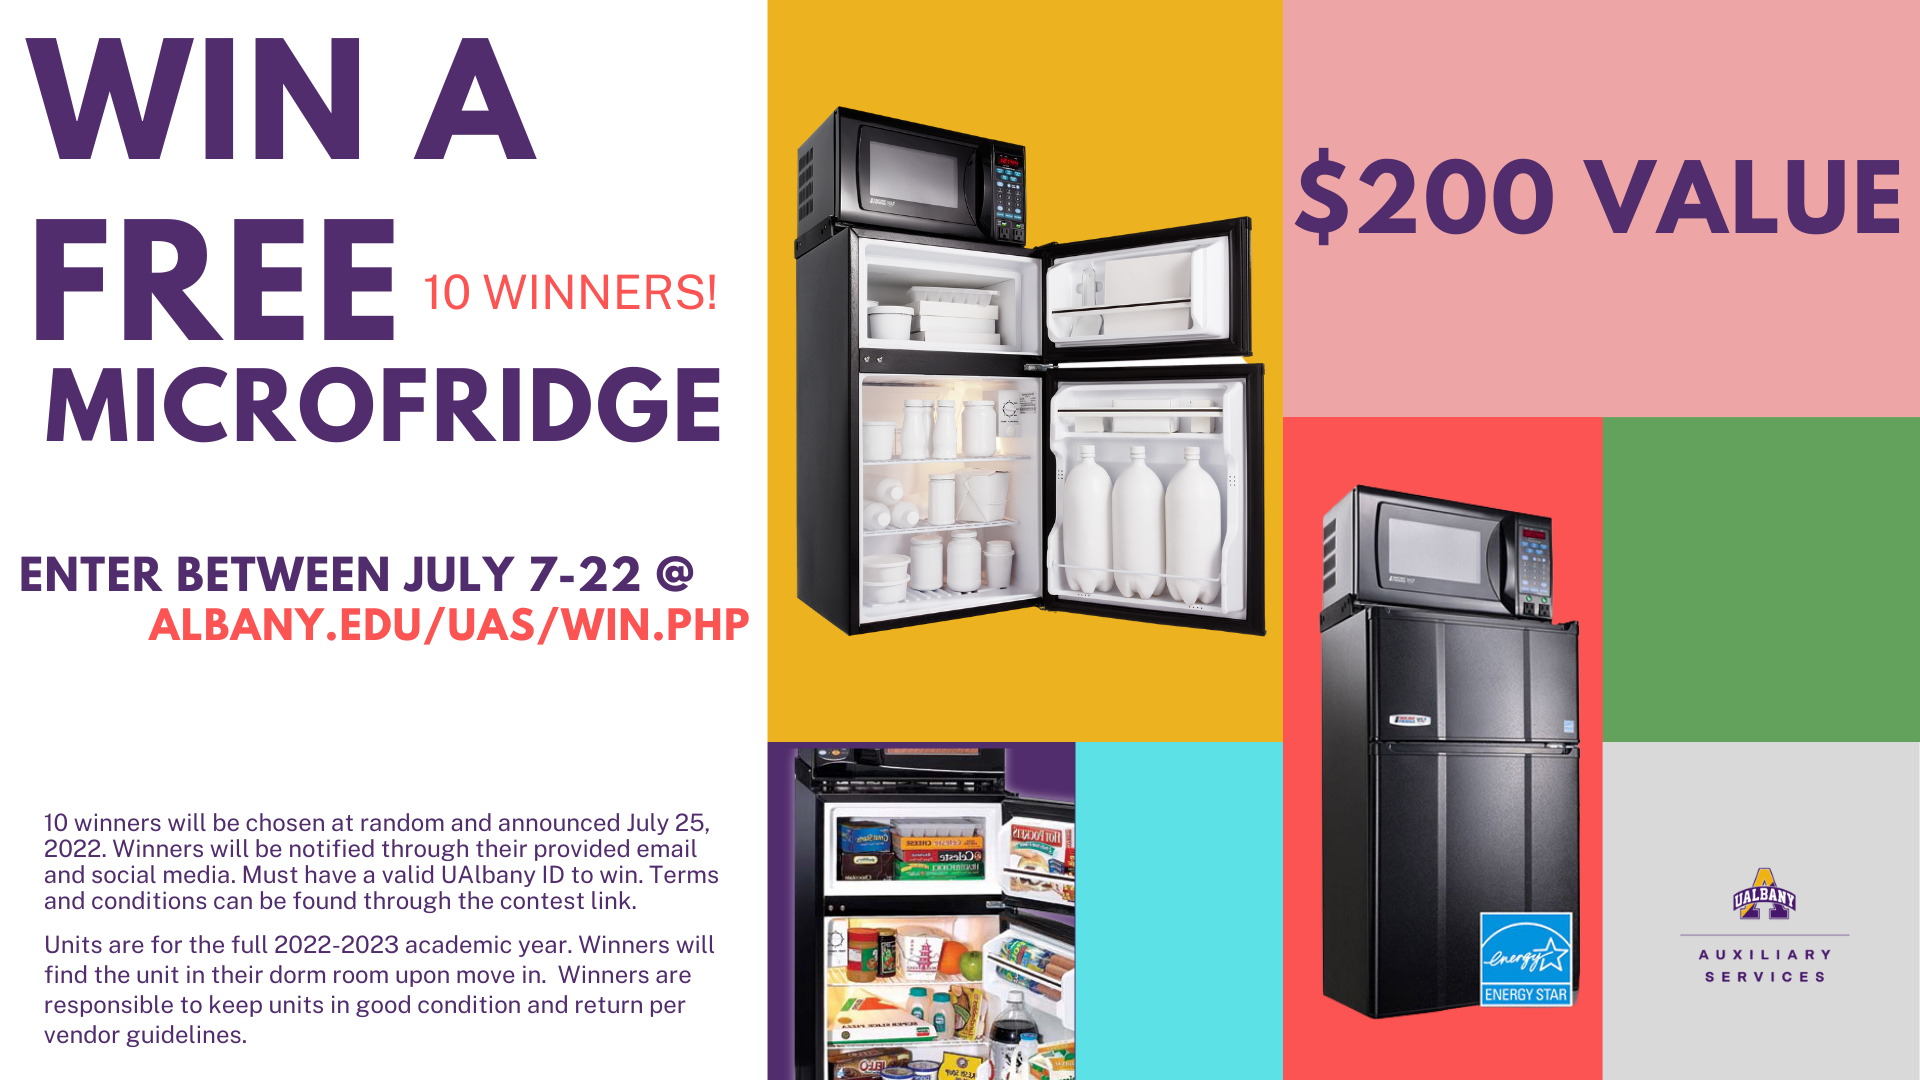 MicroFridge Giveaway. Enter to win by July 22, 2022. 10 Winners